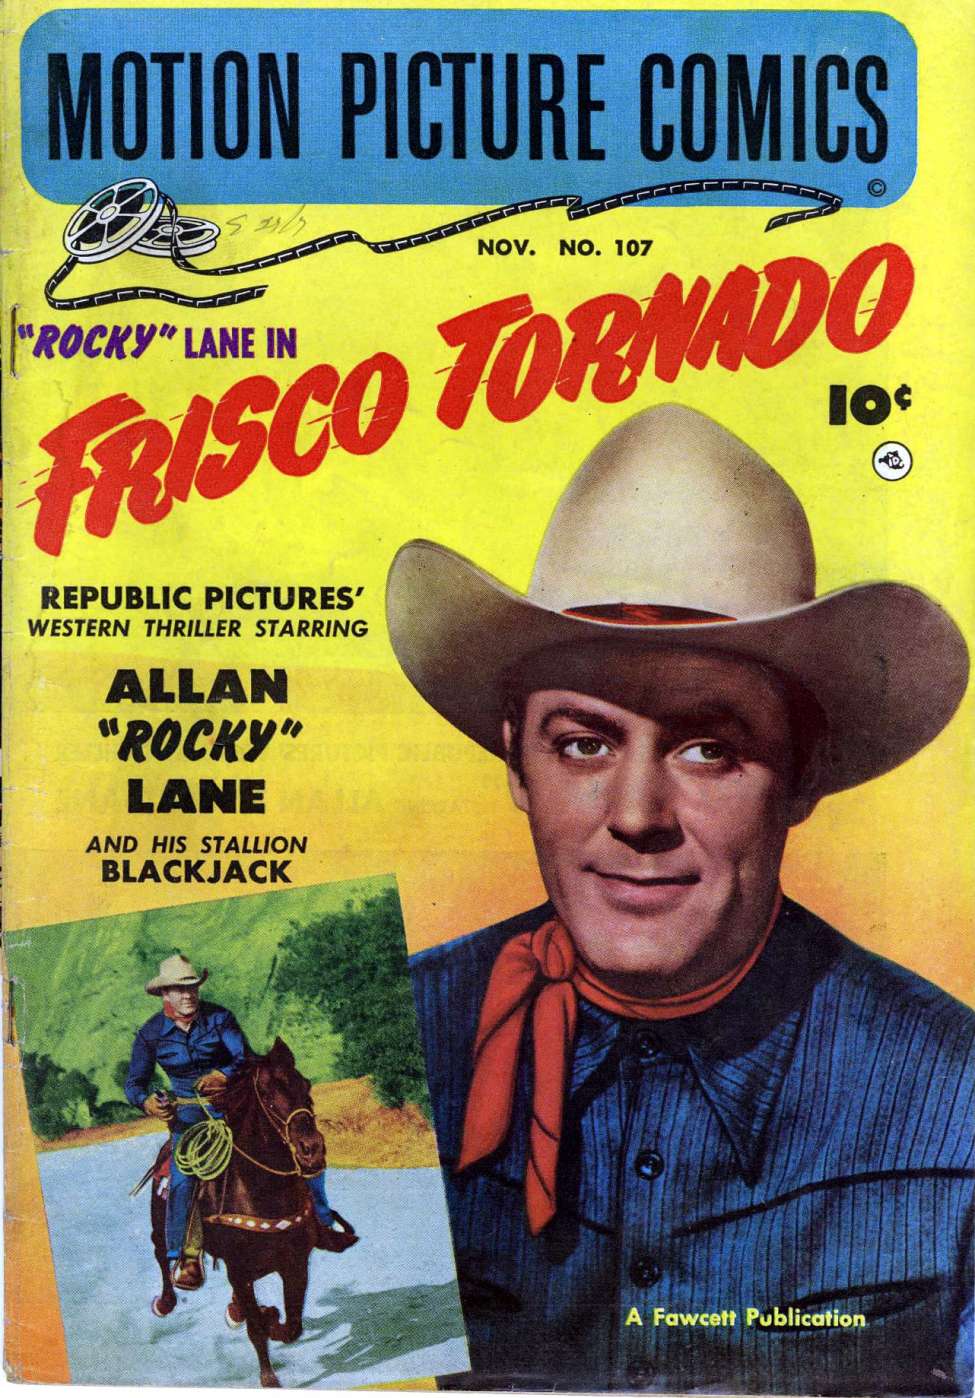 Book Cover For Motion Picture Comics 107 Frisco Tornado